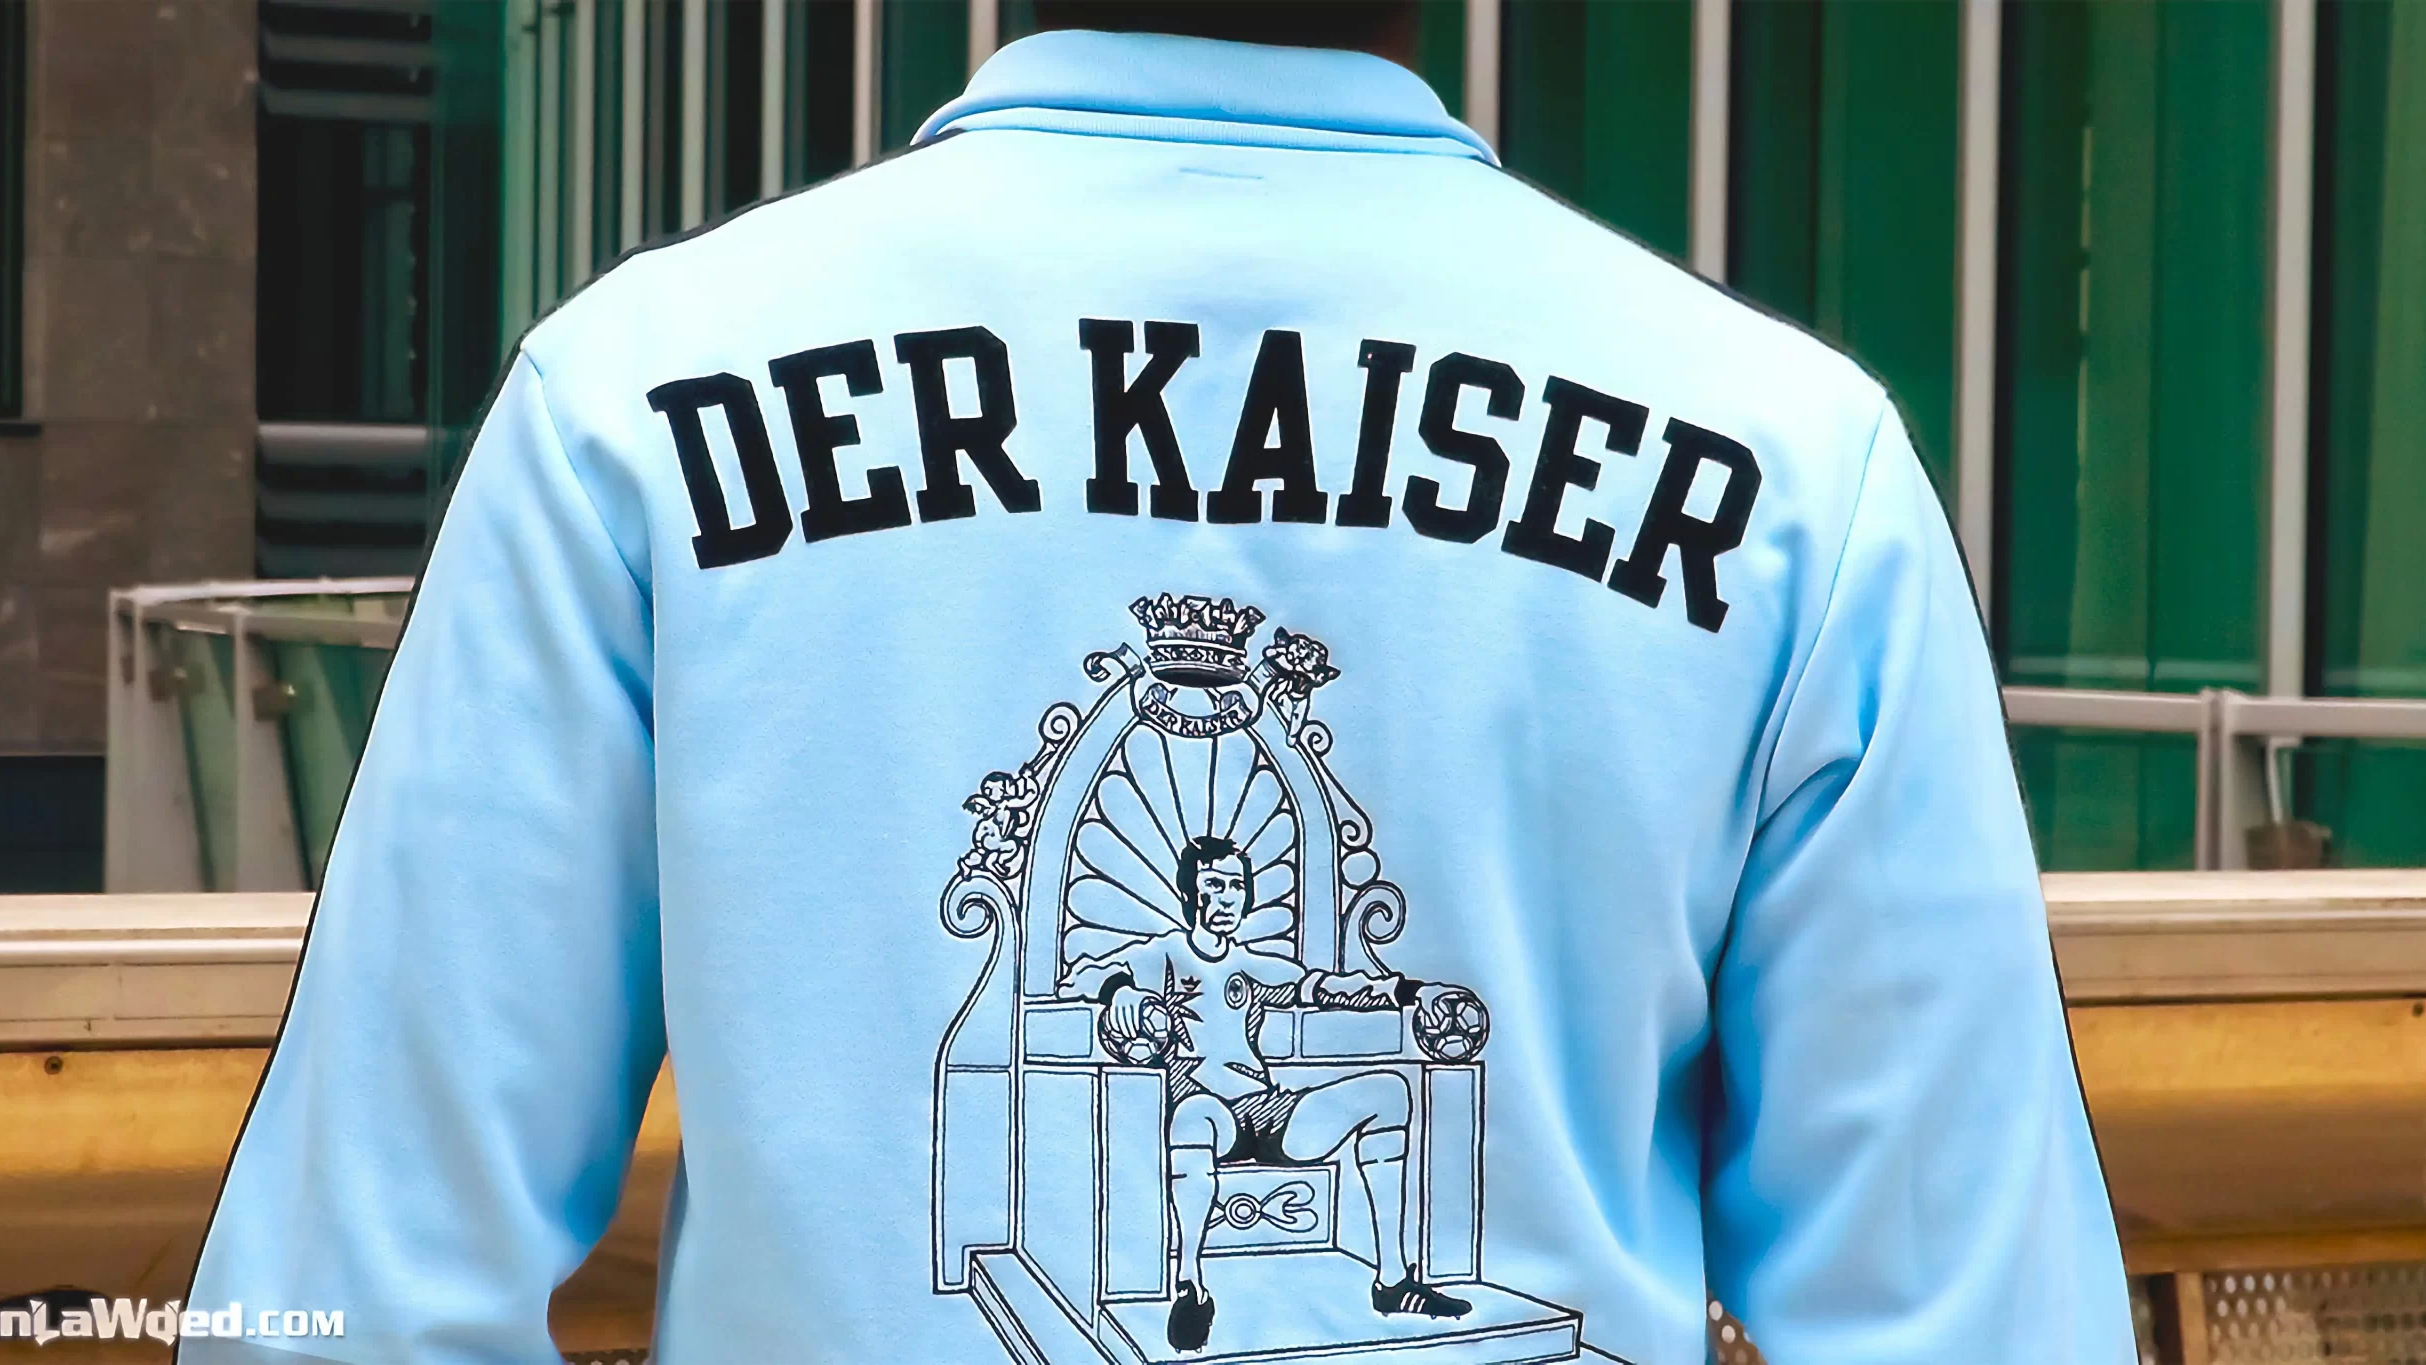 Men’s 2005 Der Kaiser ’74 Track Top by Adidas Originals: Gorgeous (EnLawded.com file #lmchk89887ip2y121624kg9st)